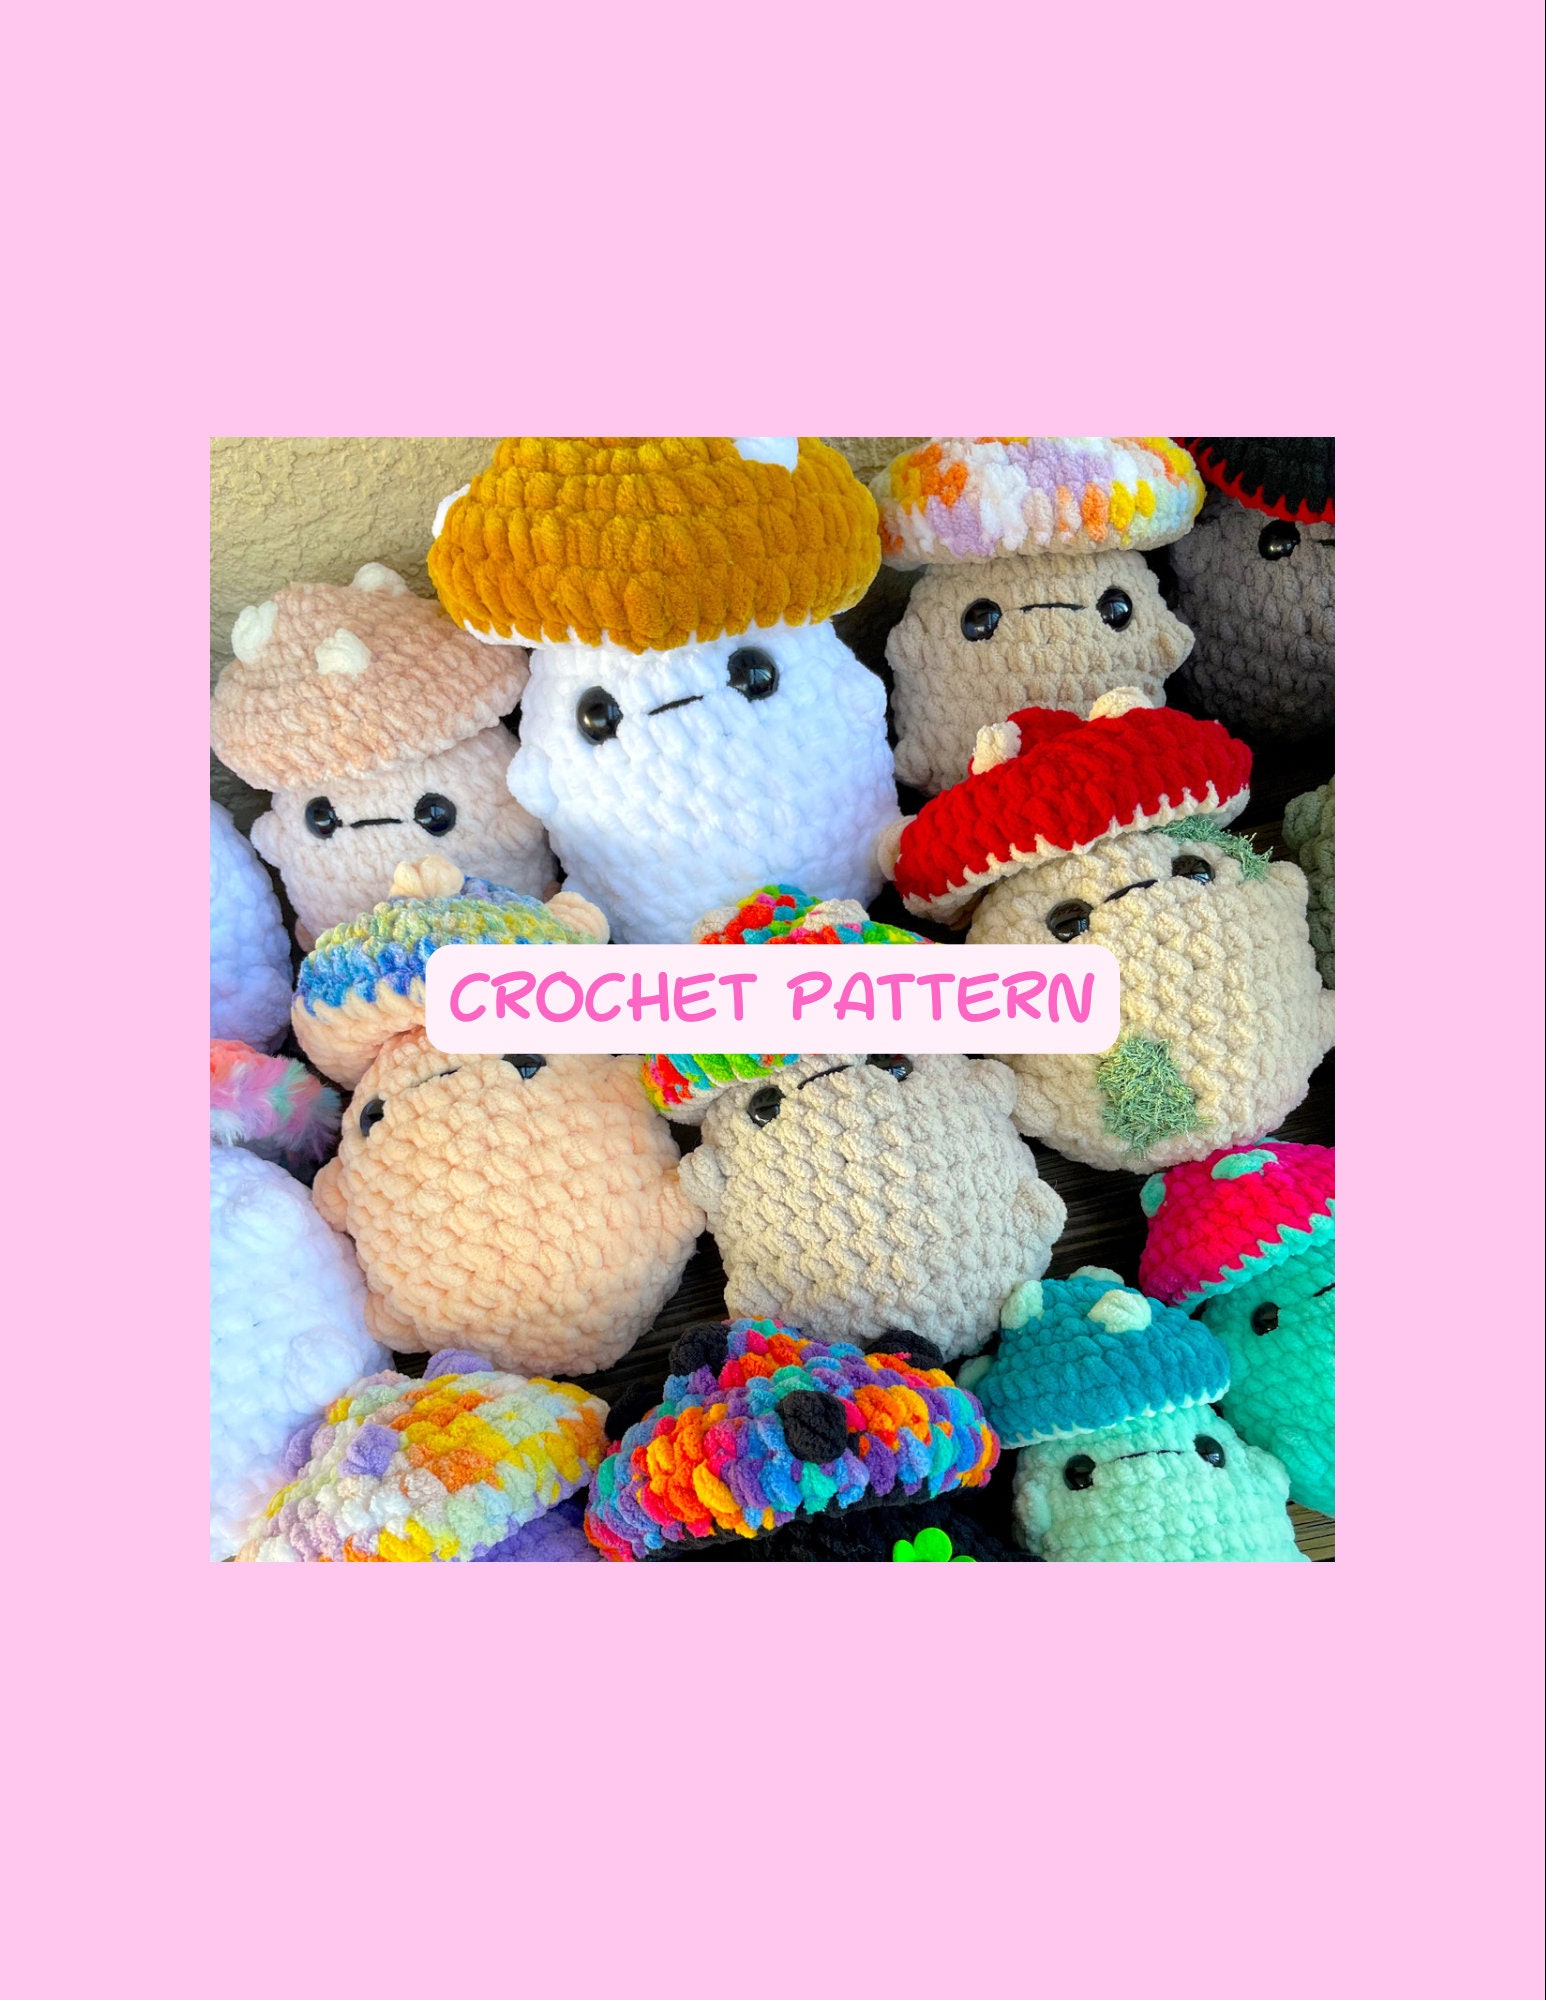 Crochet Mushroom Patterns That Scream Cottage Core - Crochet 365 Knit Too